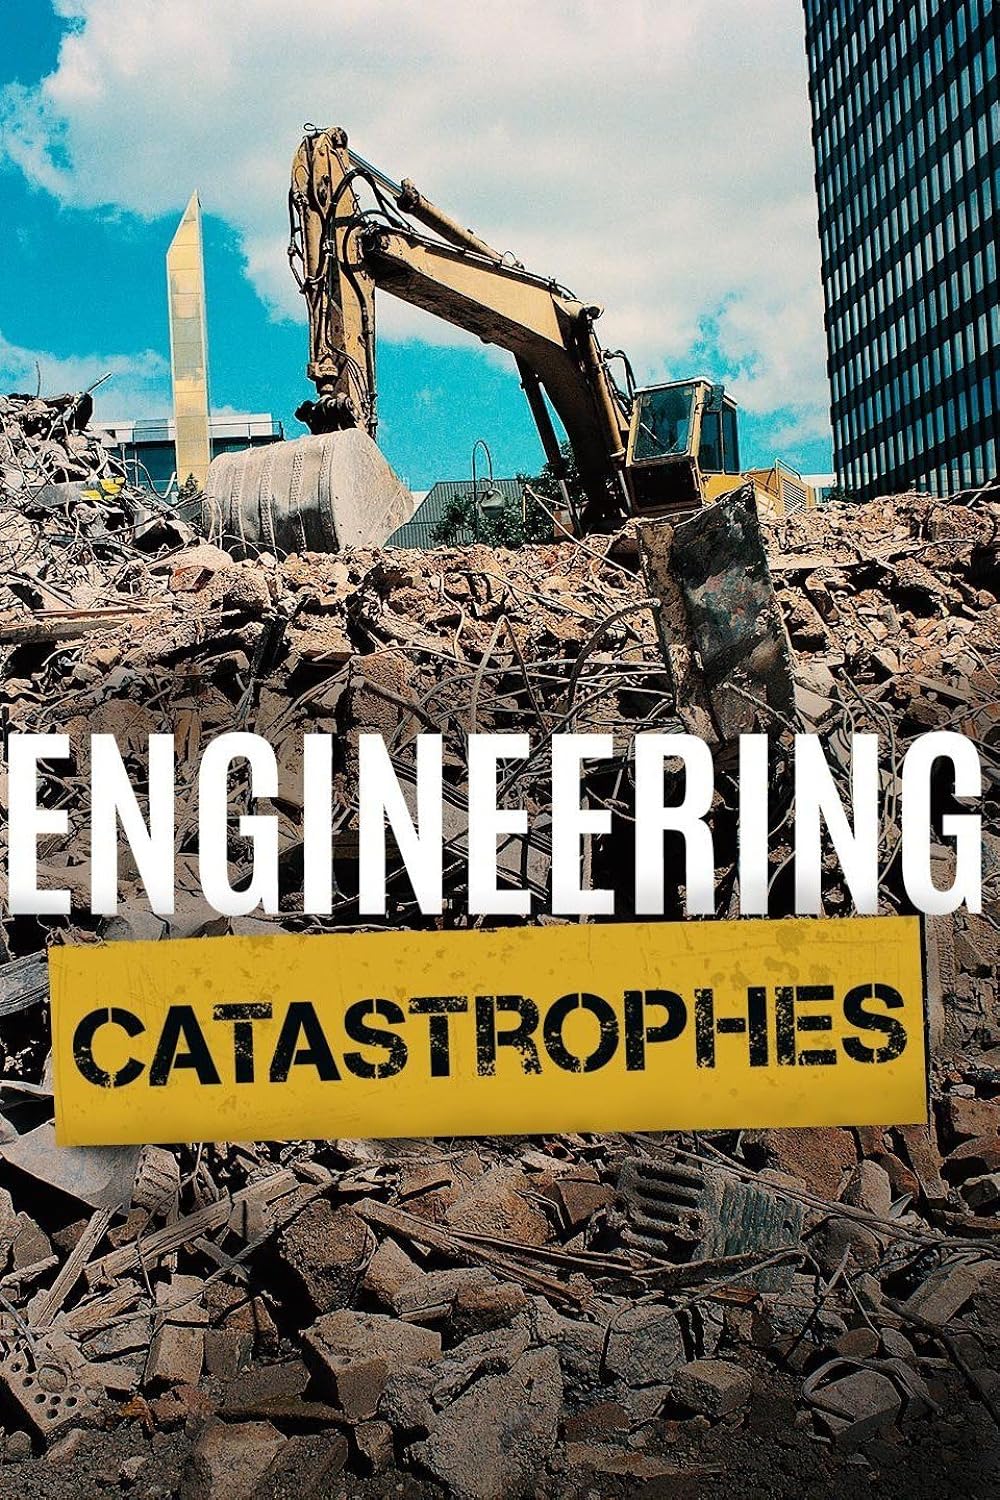 Engineering Catastrophes